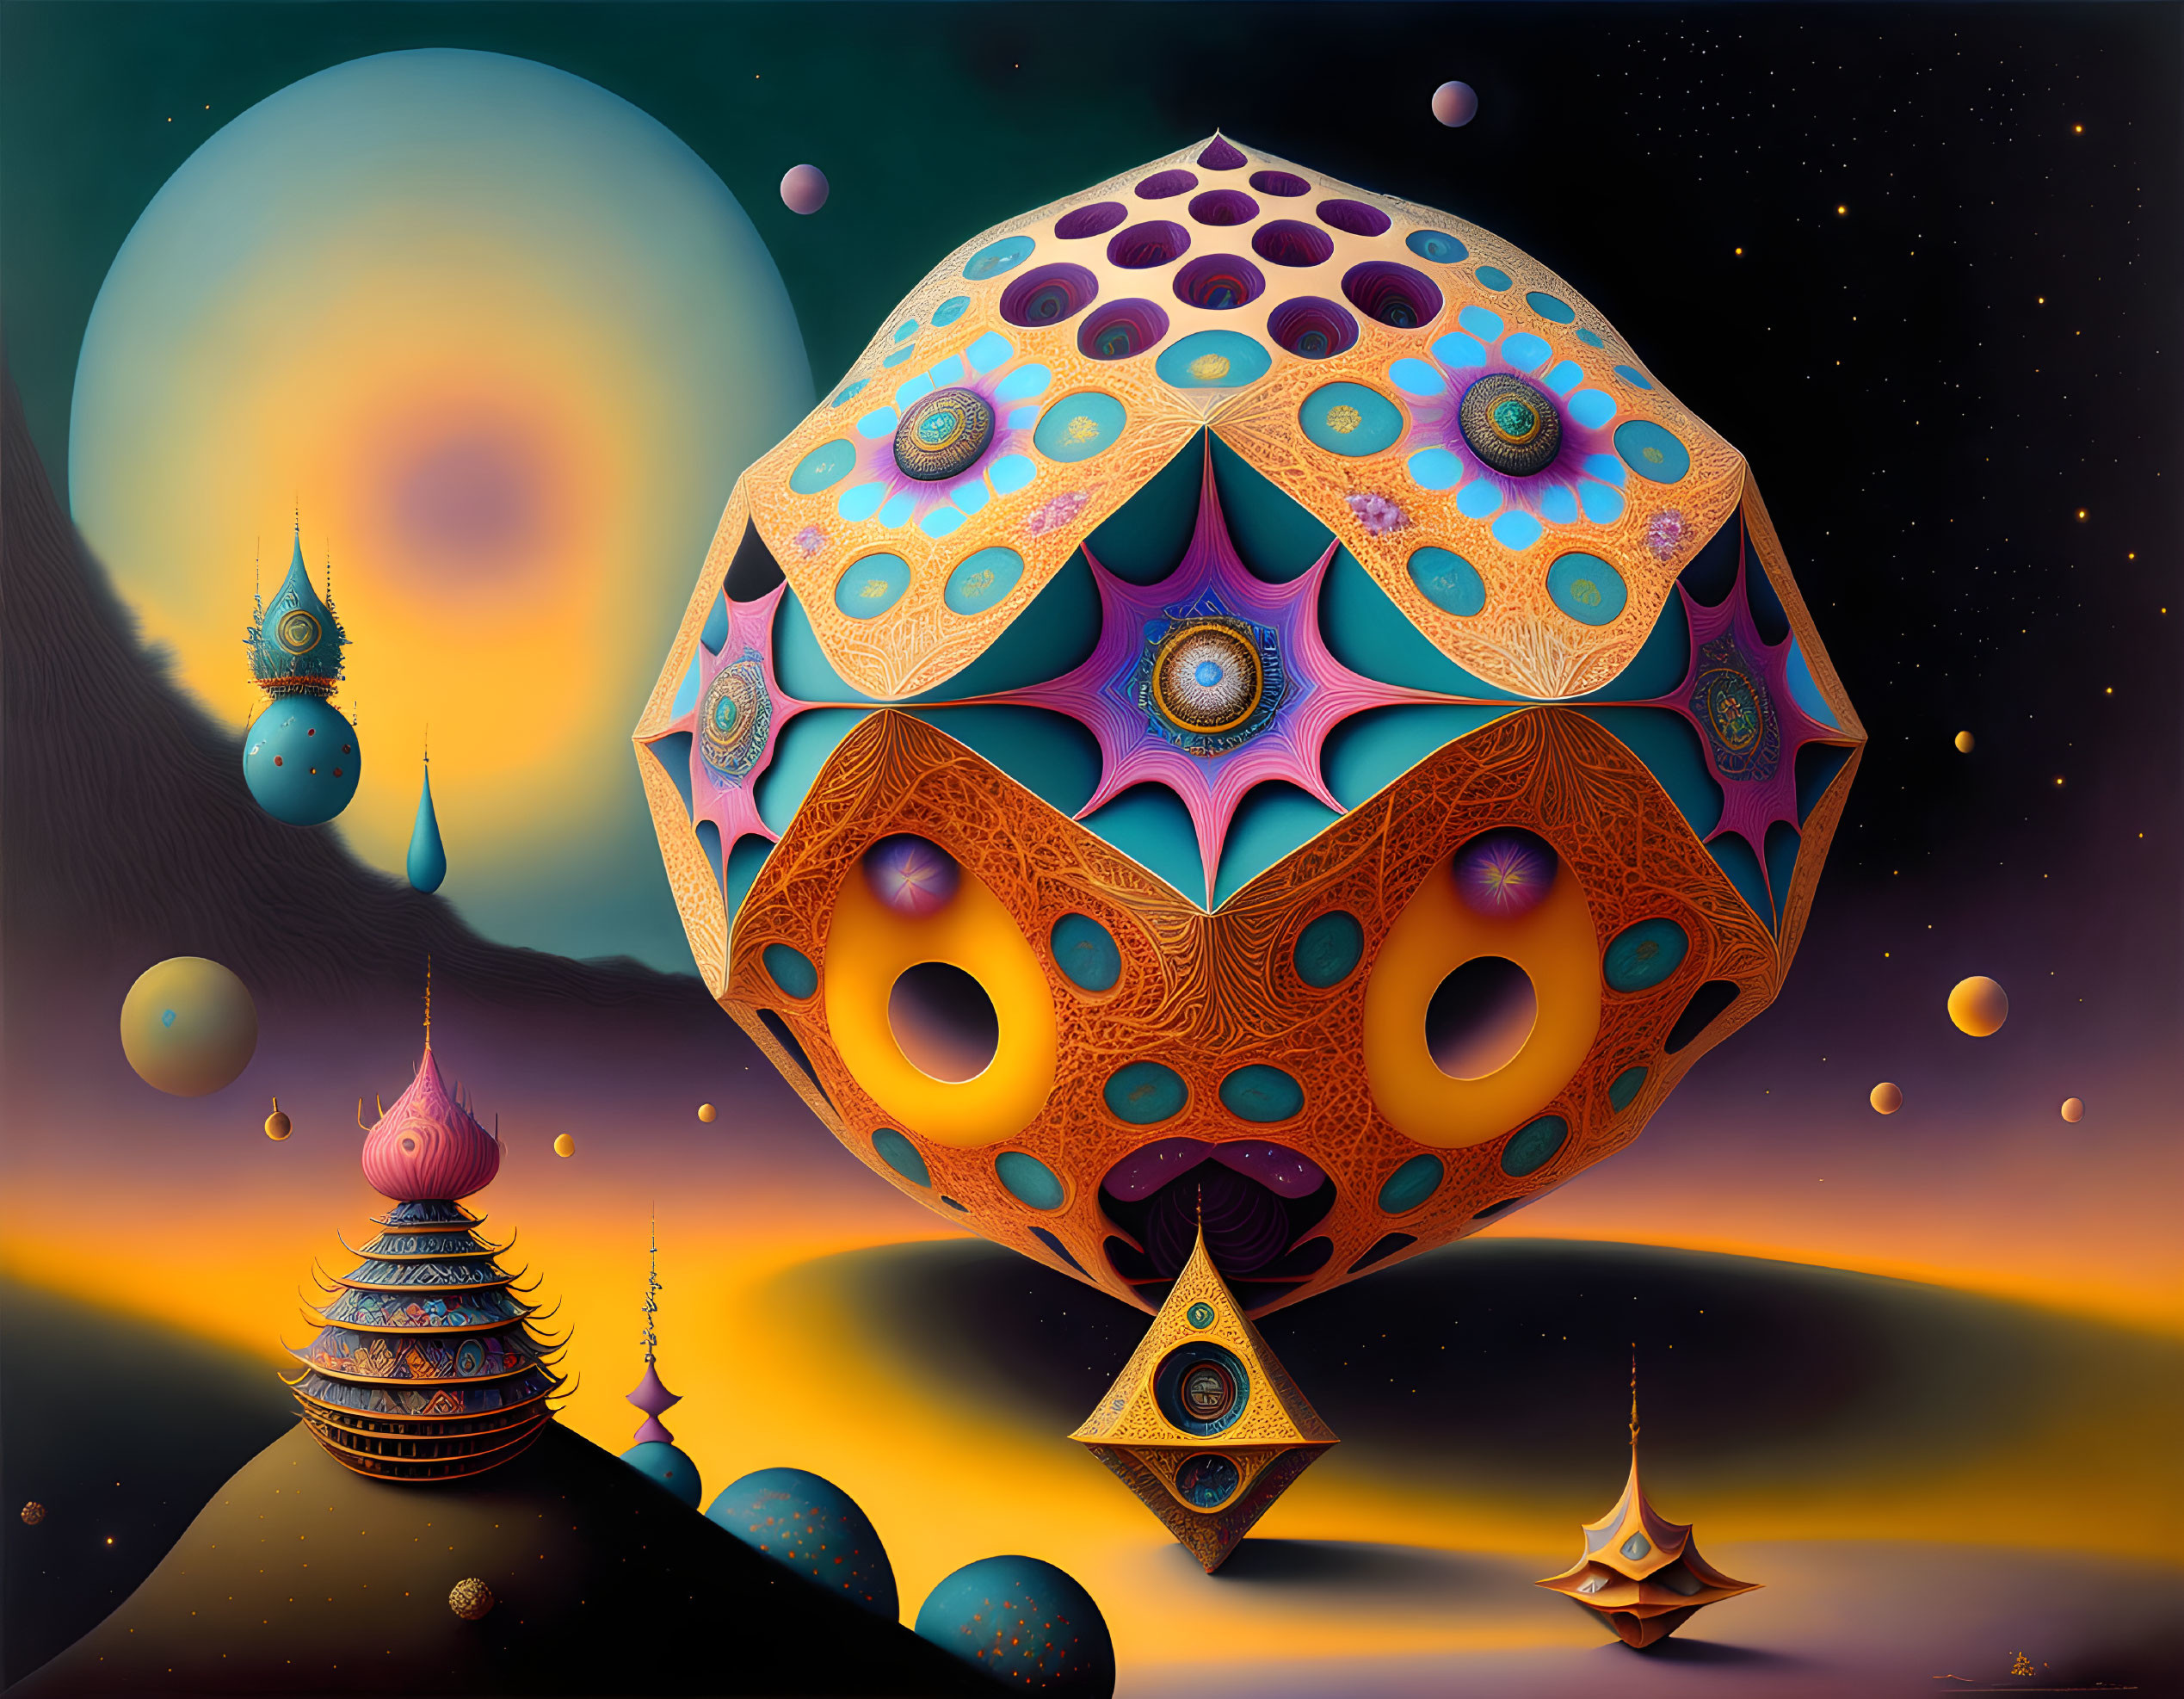 Icosahedron Surreal